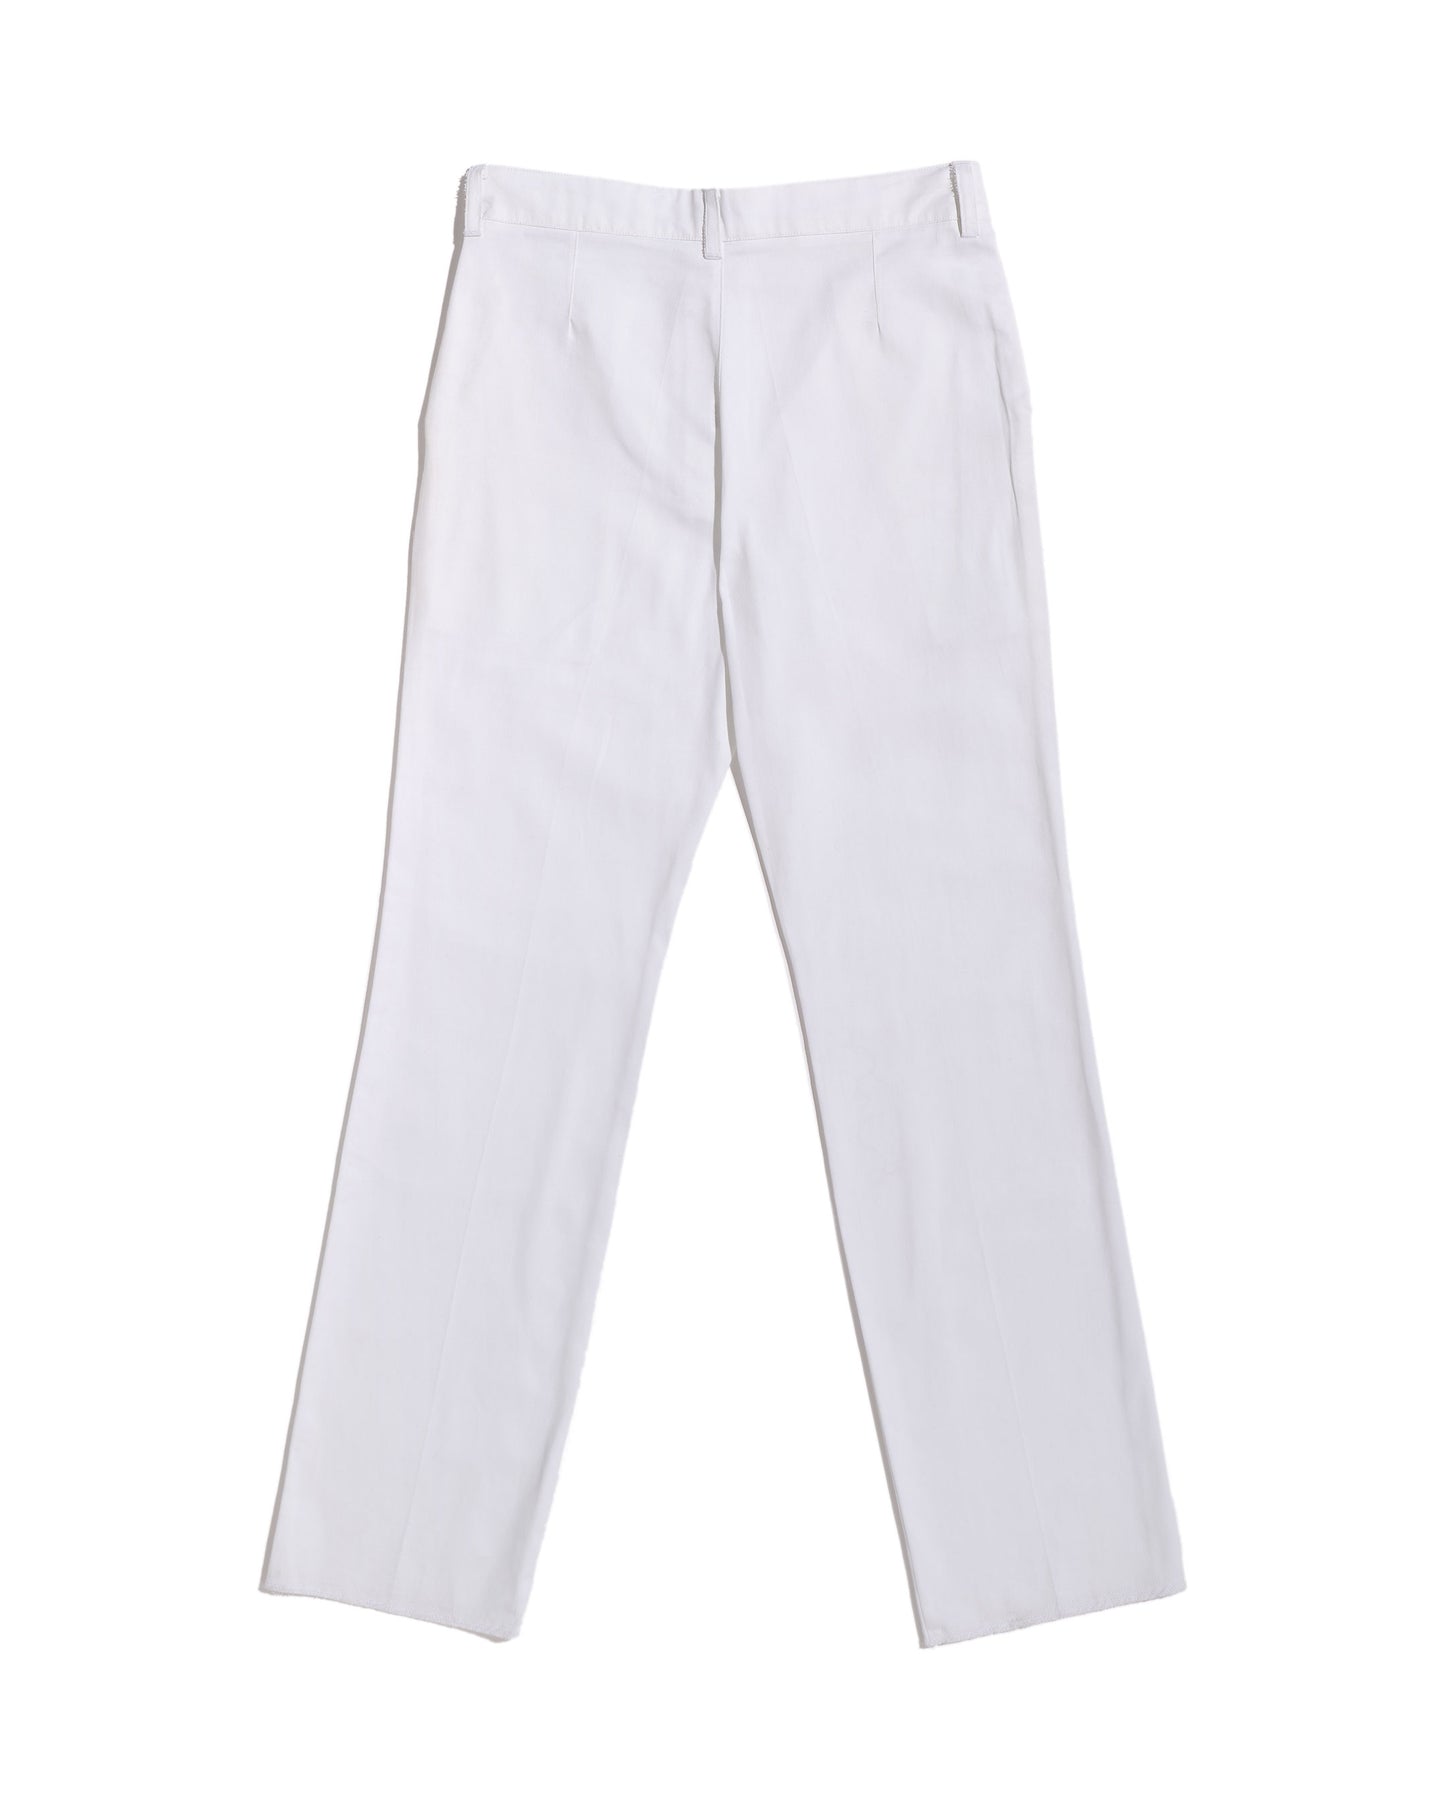 White cotton Raseteur pants